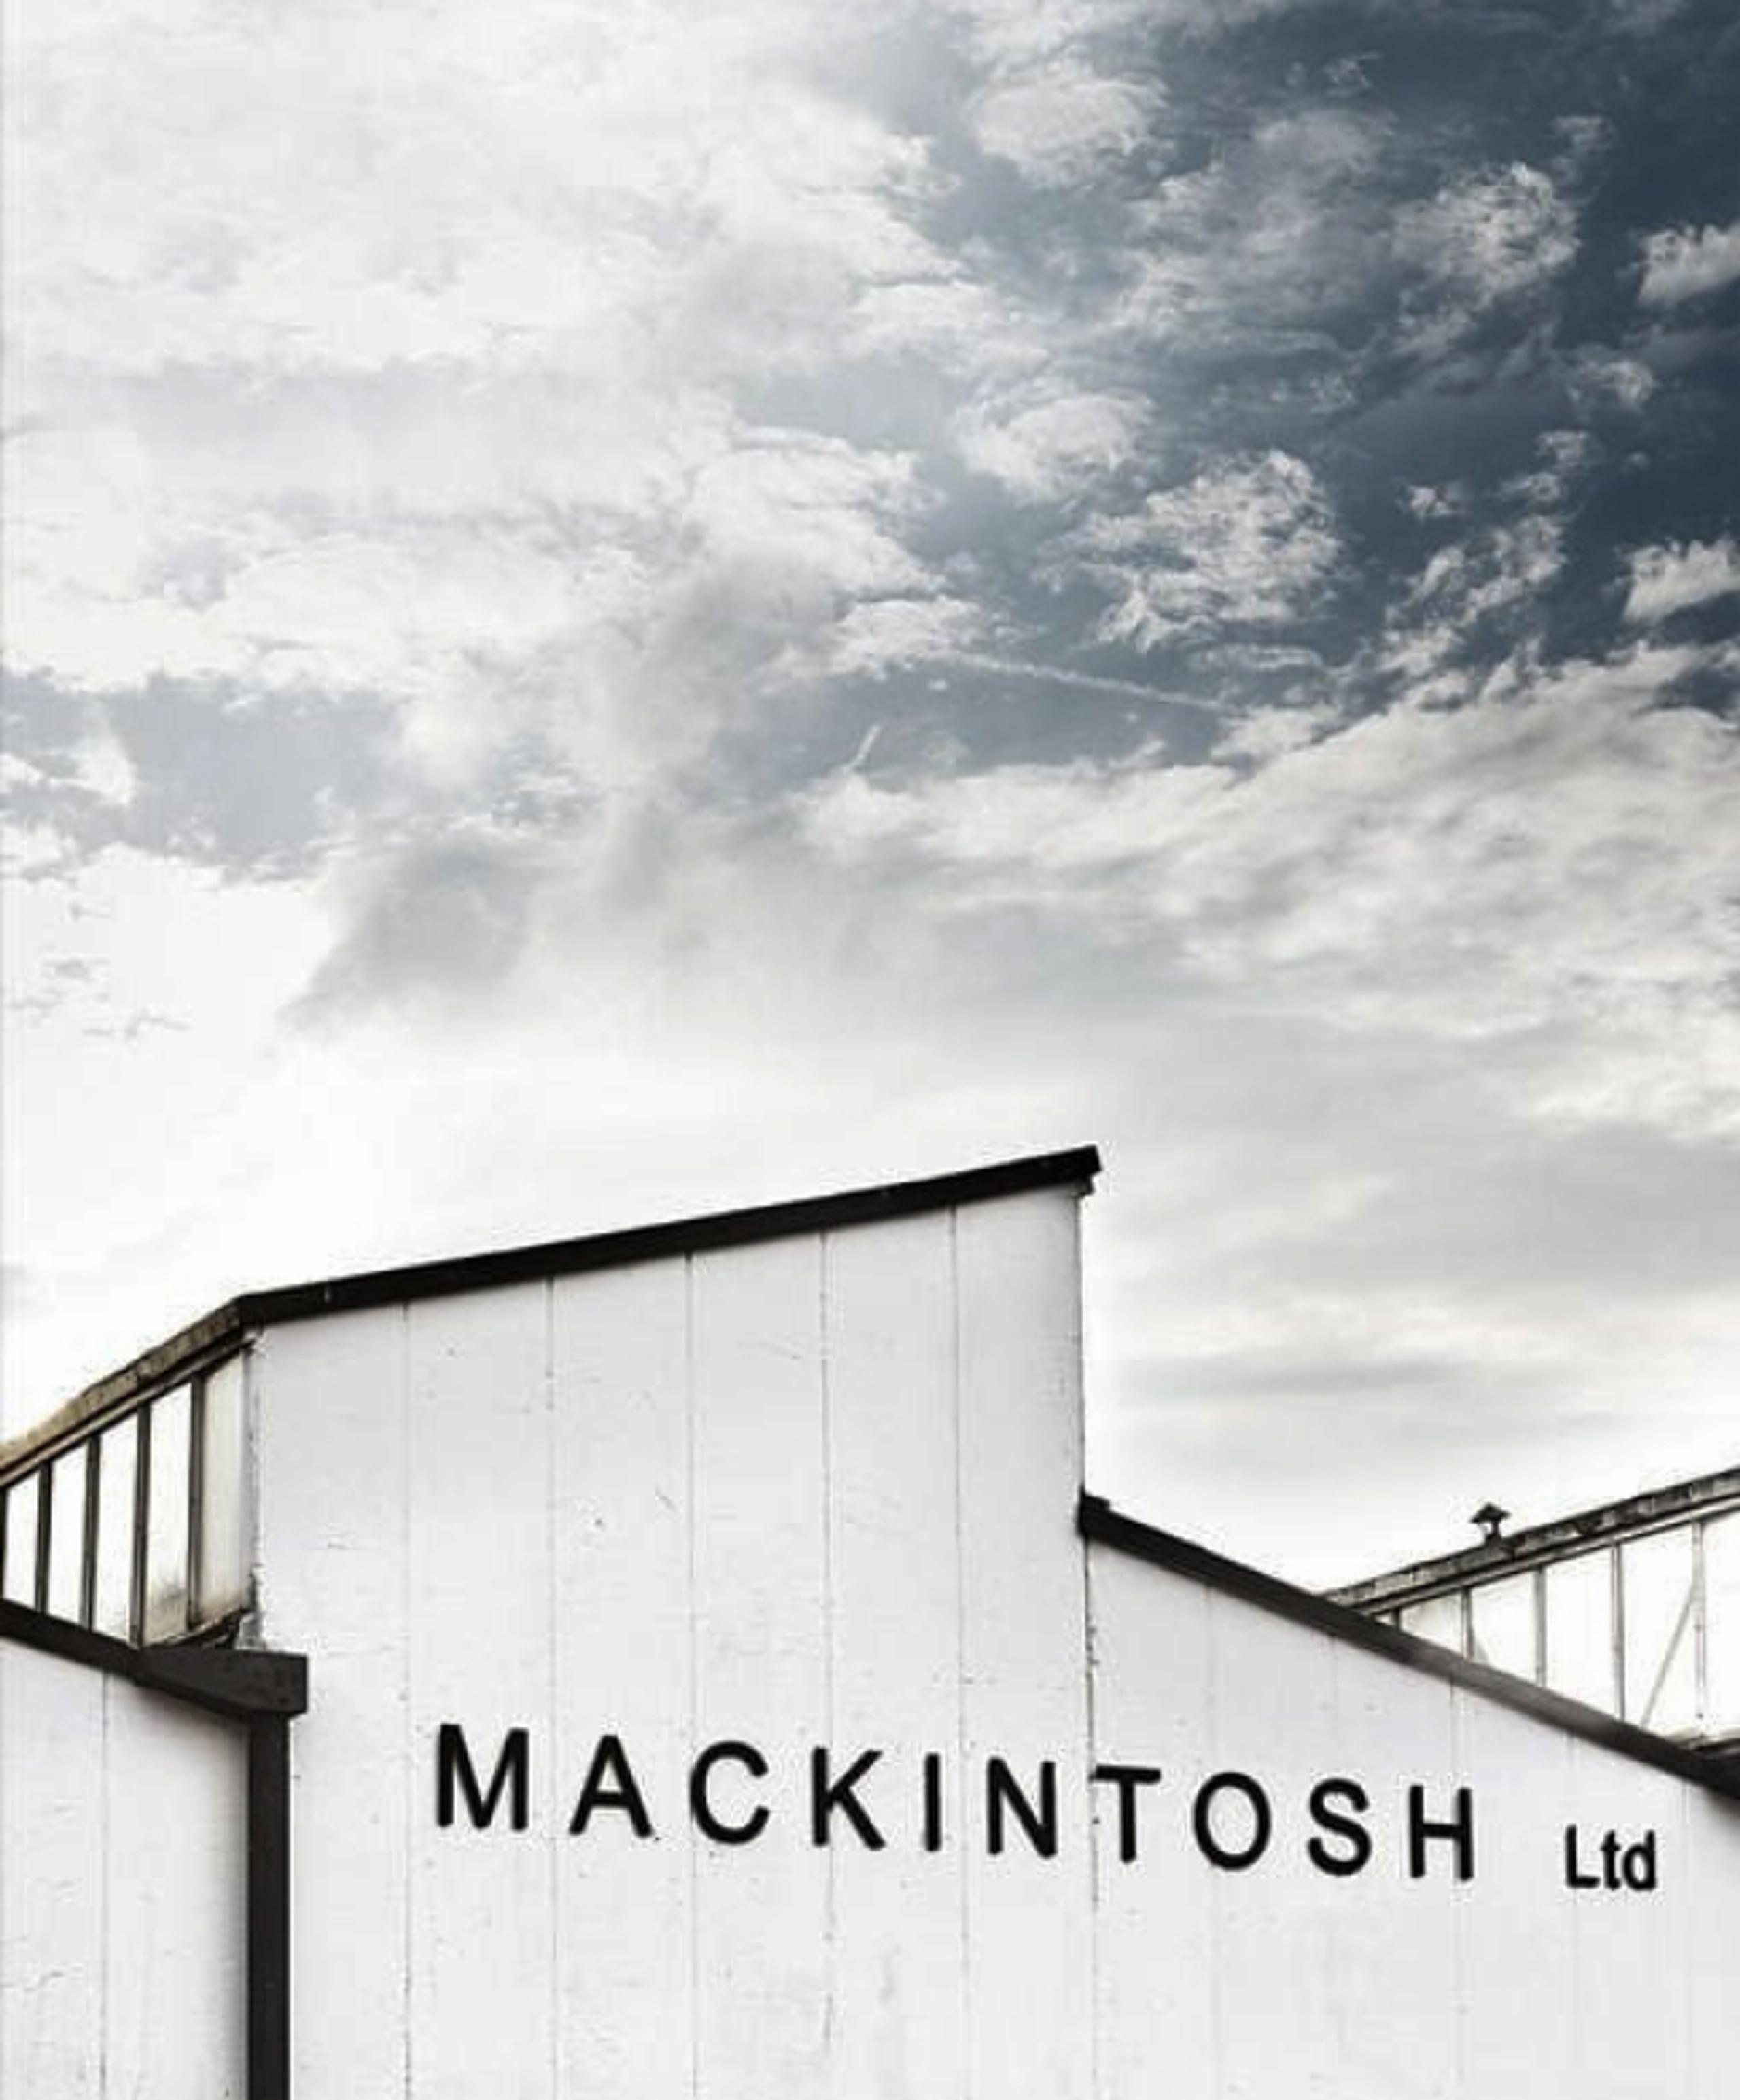 Mackintosh building